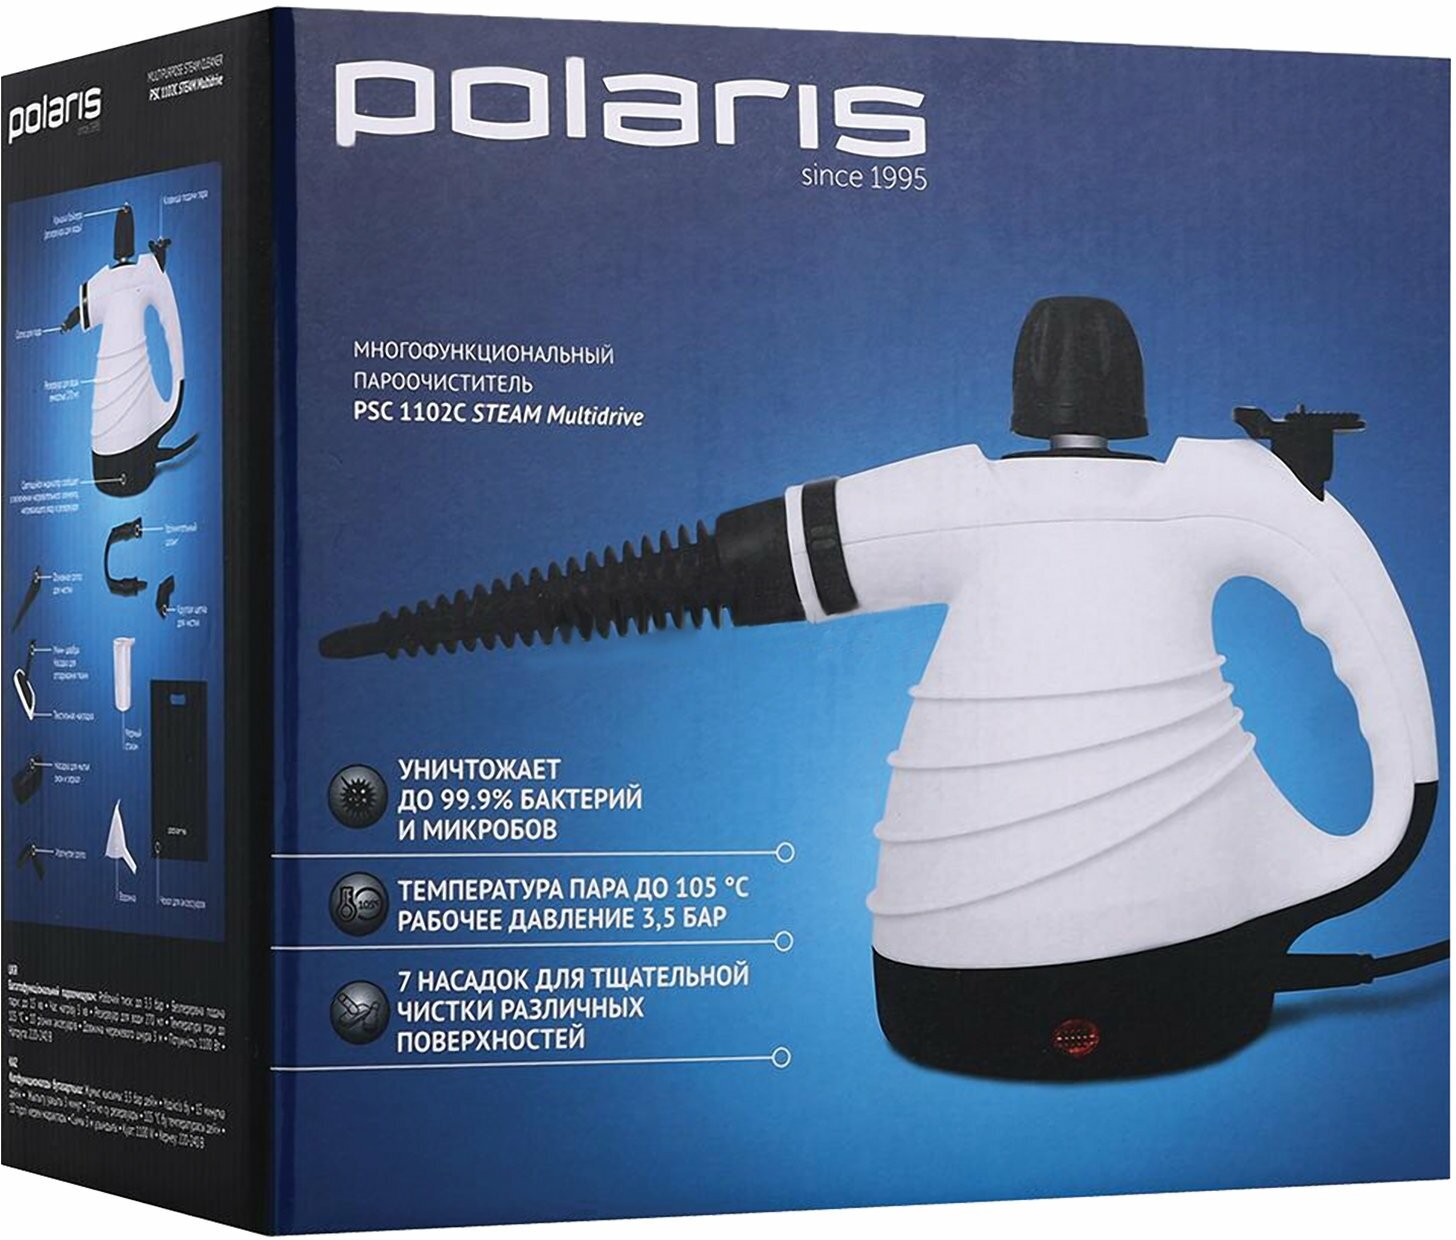 Polaris psc 1102c steam multidrive фото 10